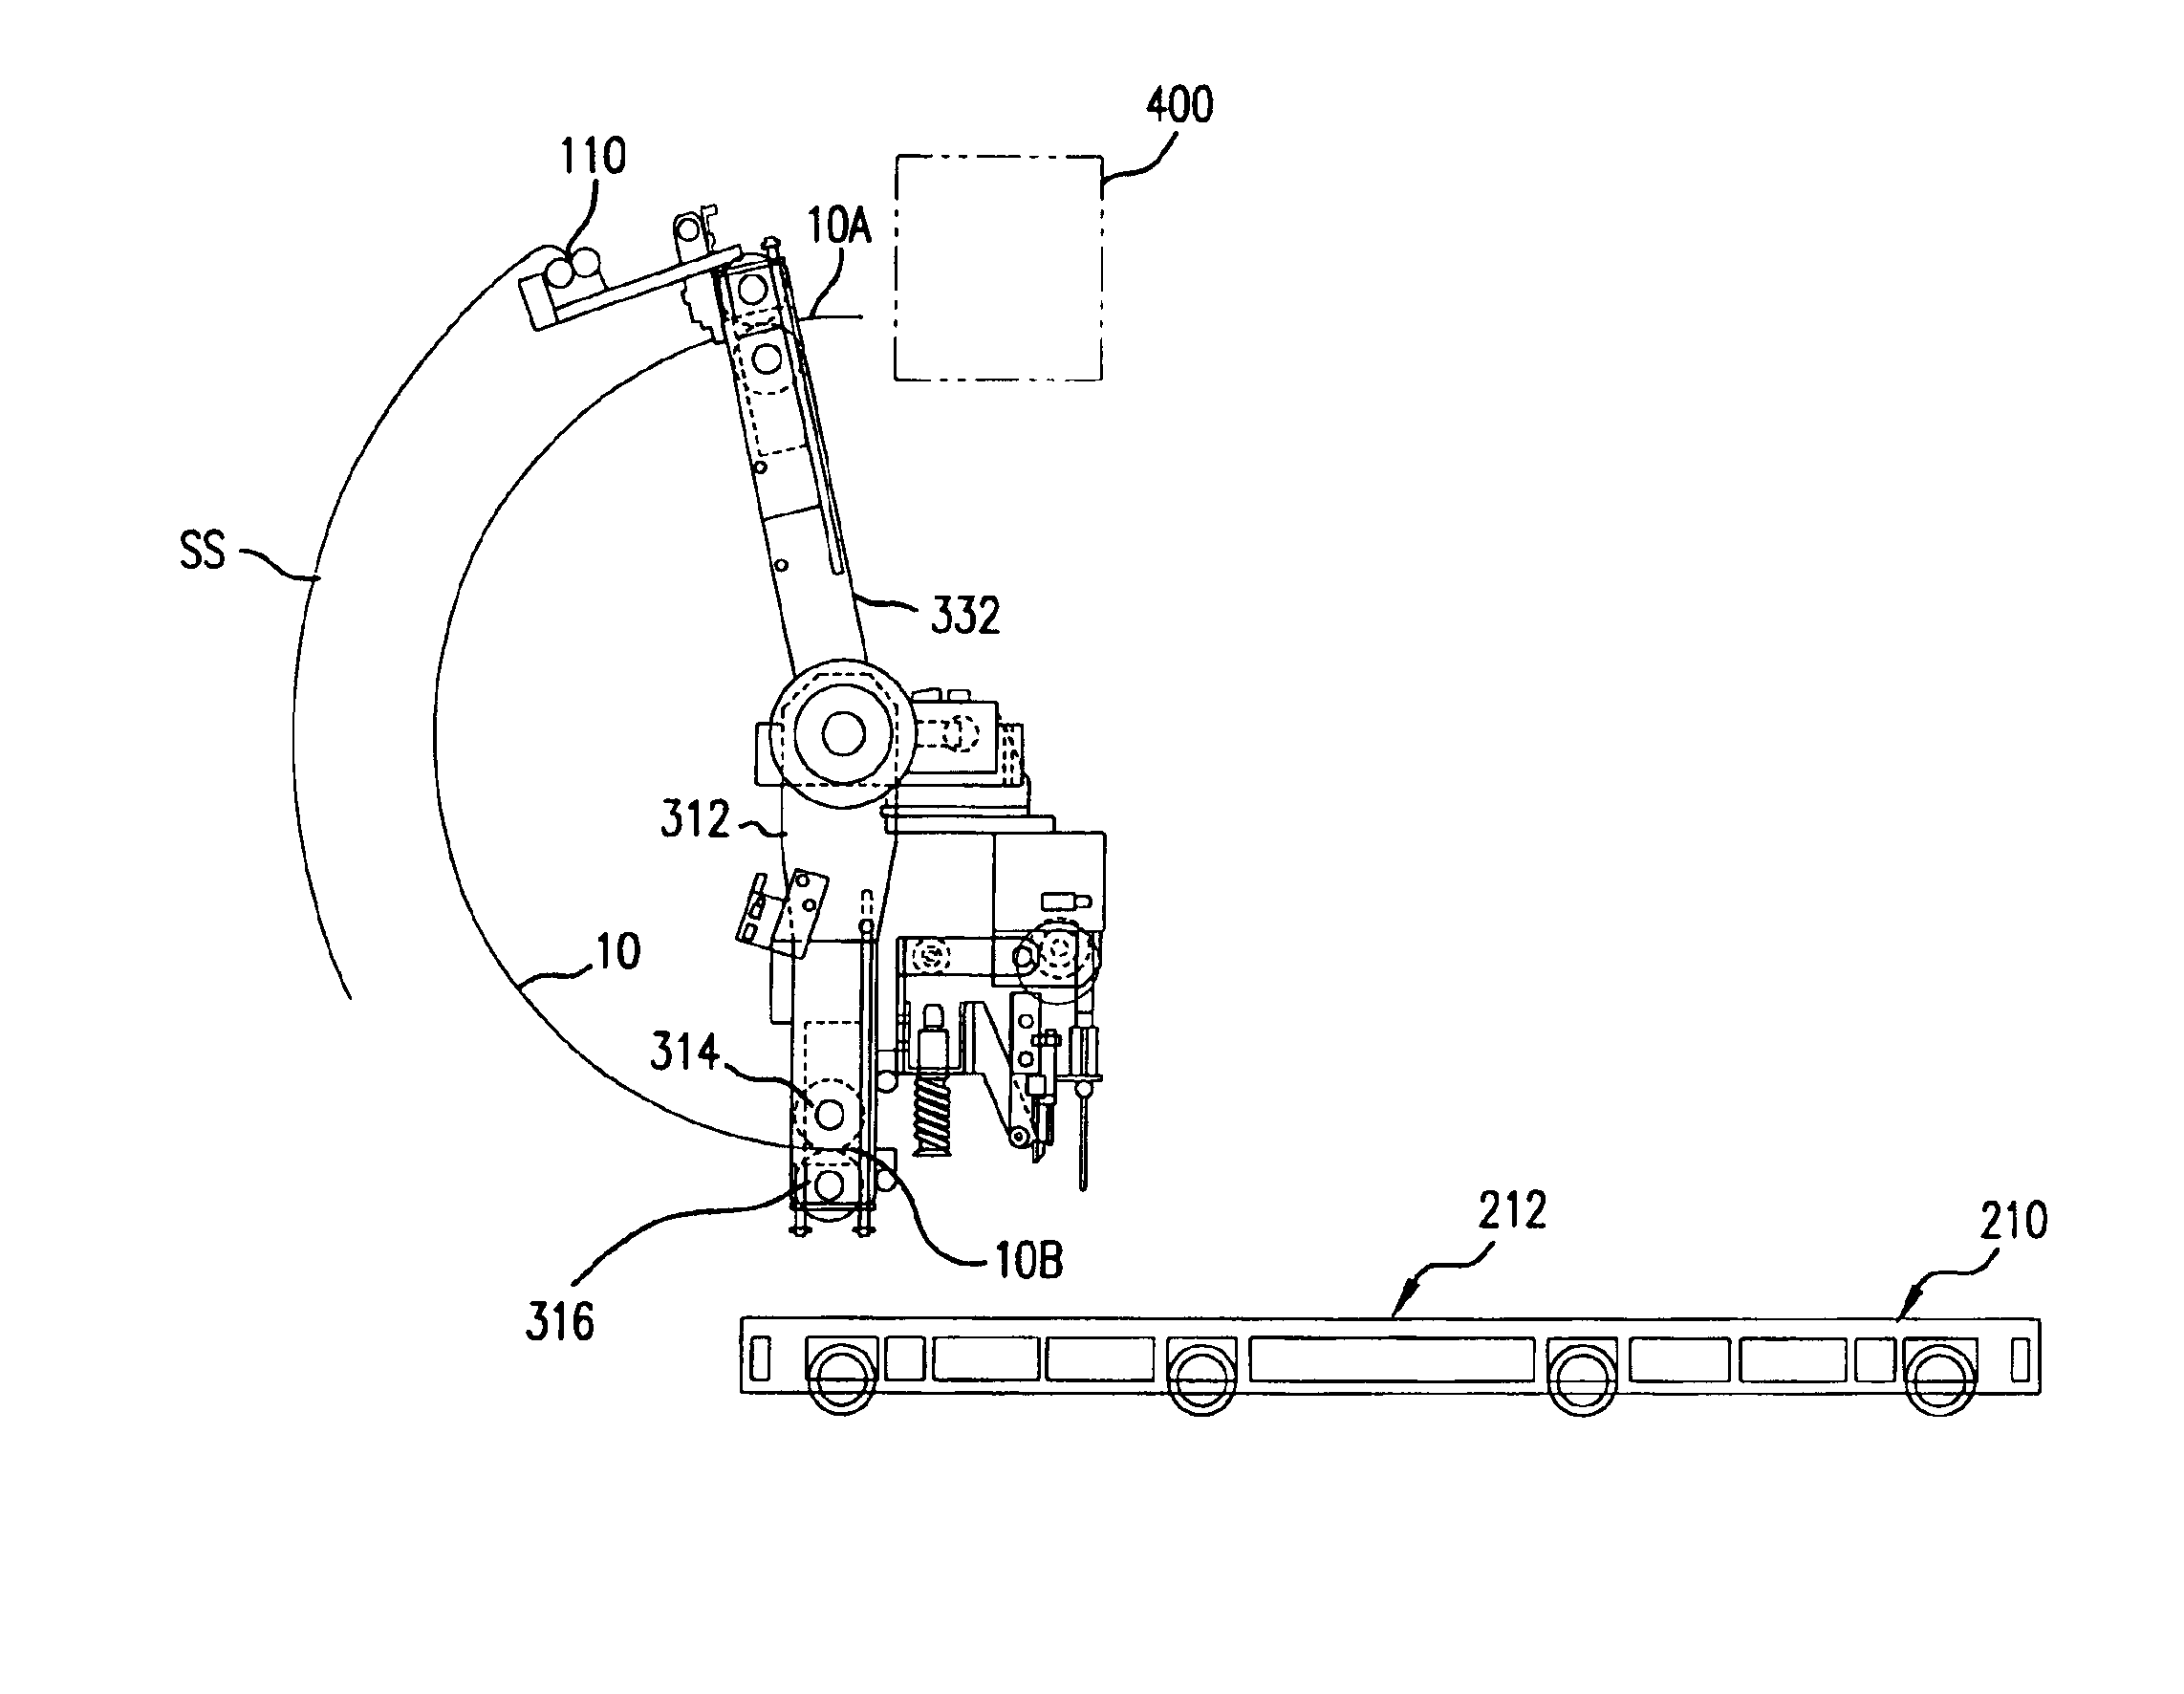 Slip sheet capture mechanism and method of operation